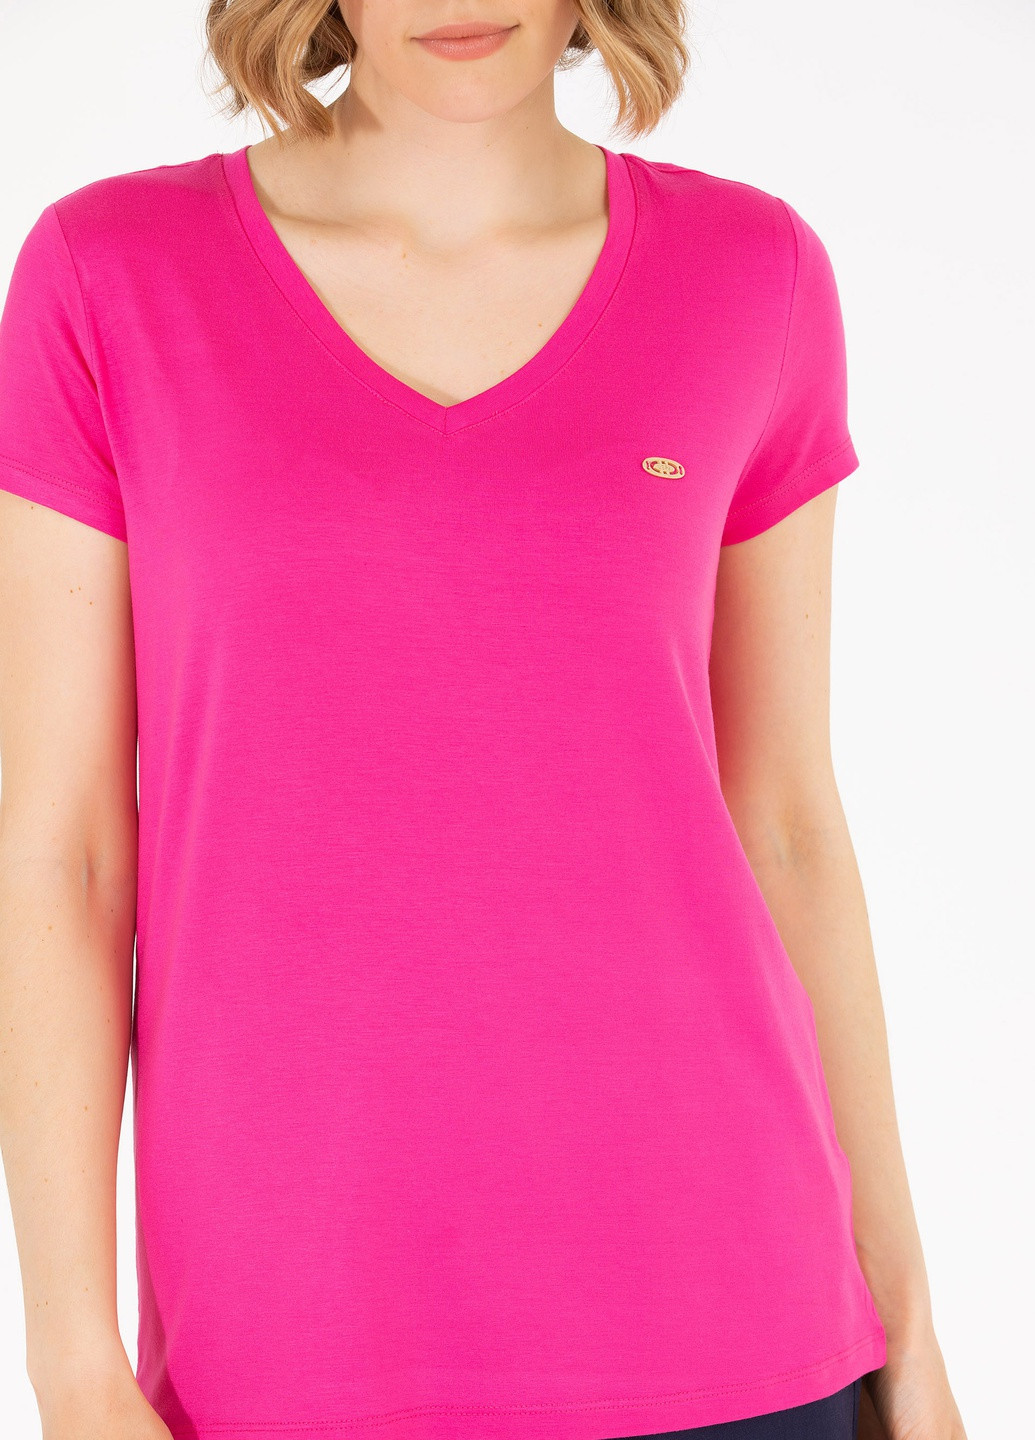 Кислотно-розовая футболка u.s.polo assn женская U.S. Polo Assn.